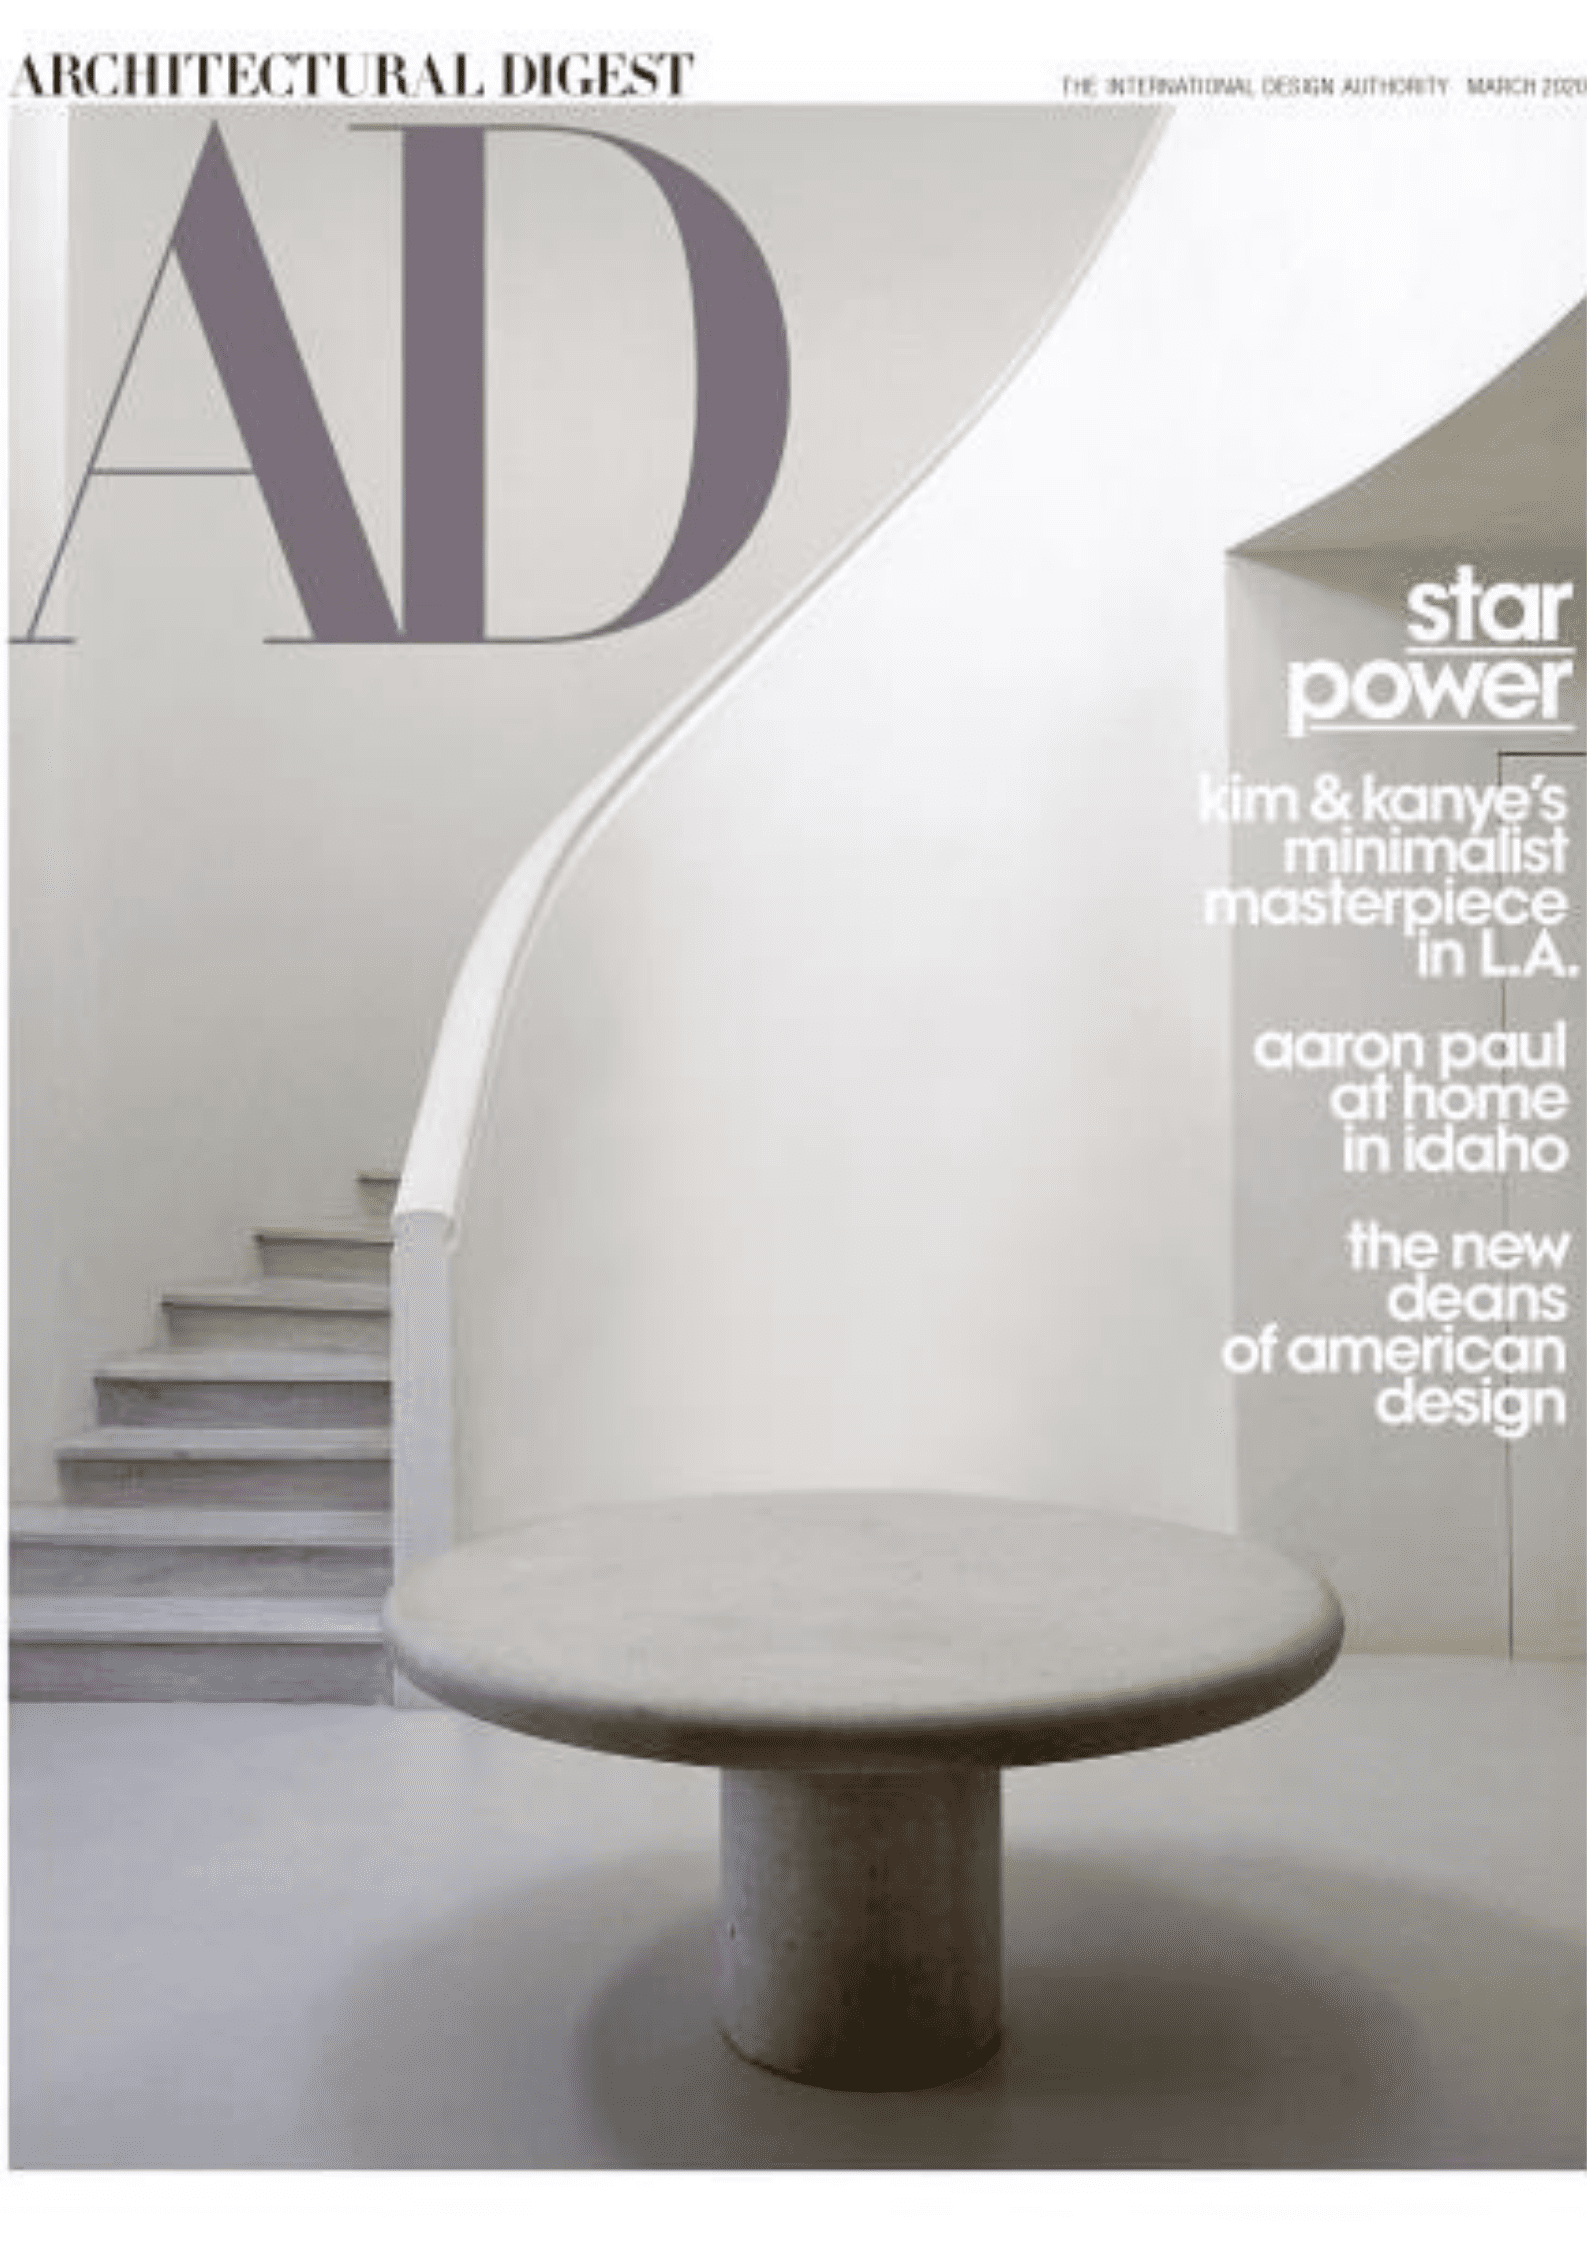 Most known interior design magazines - ad